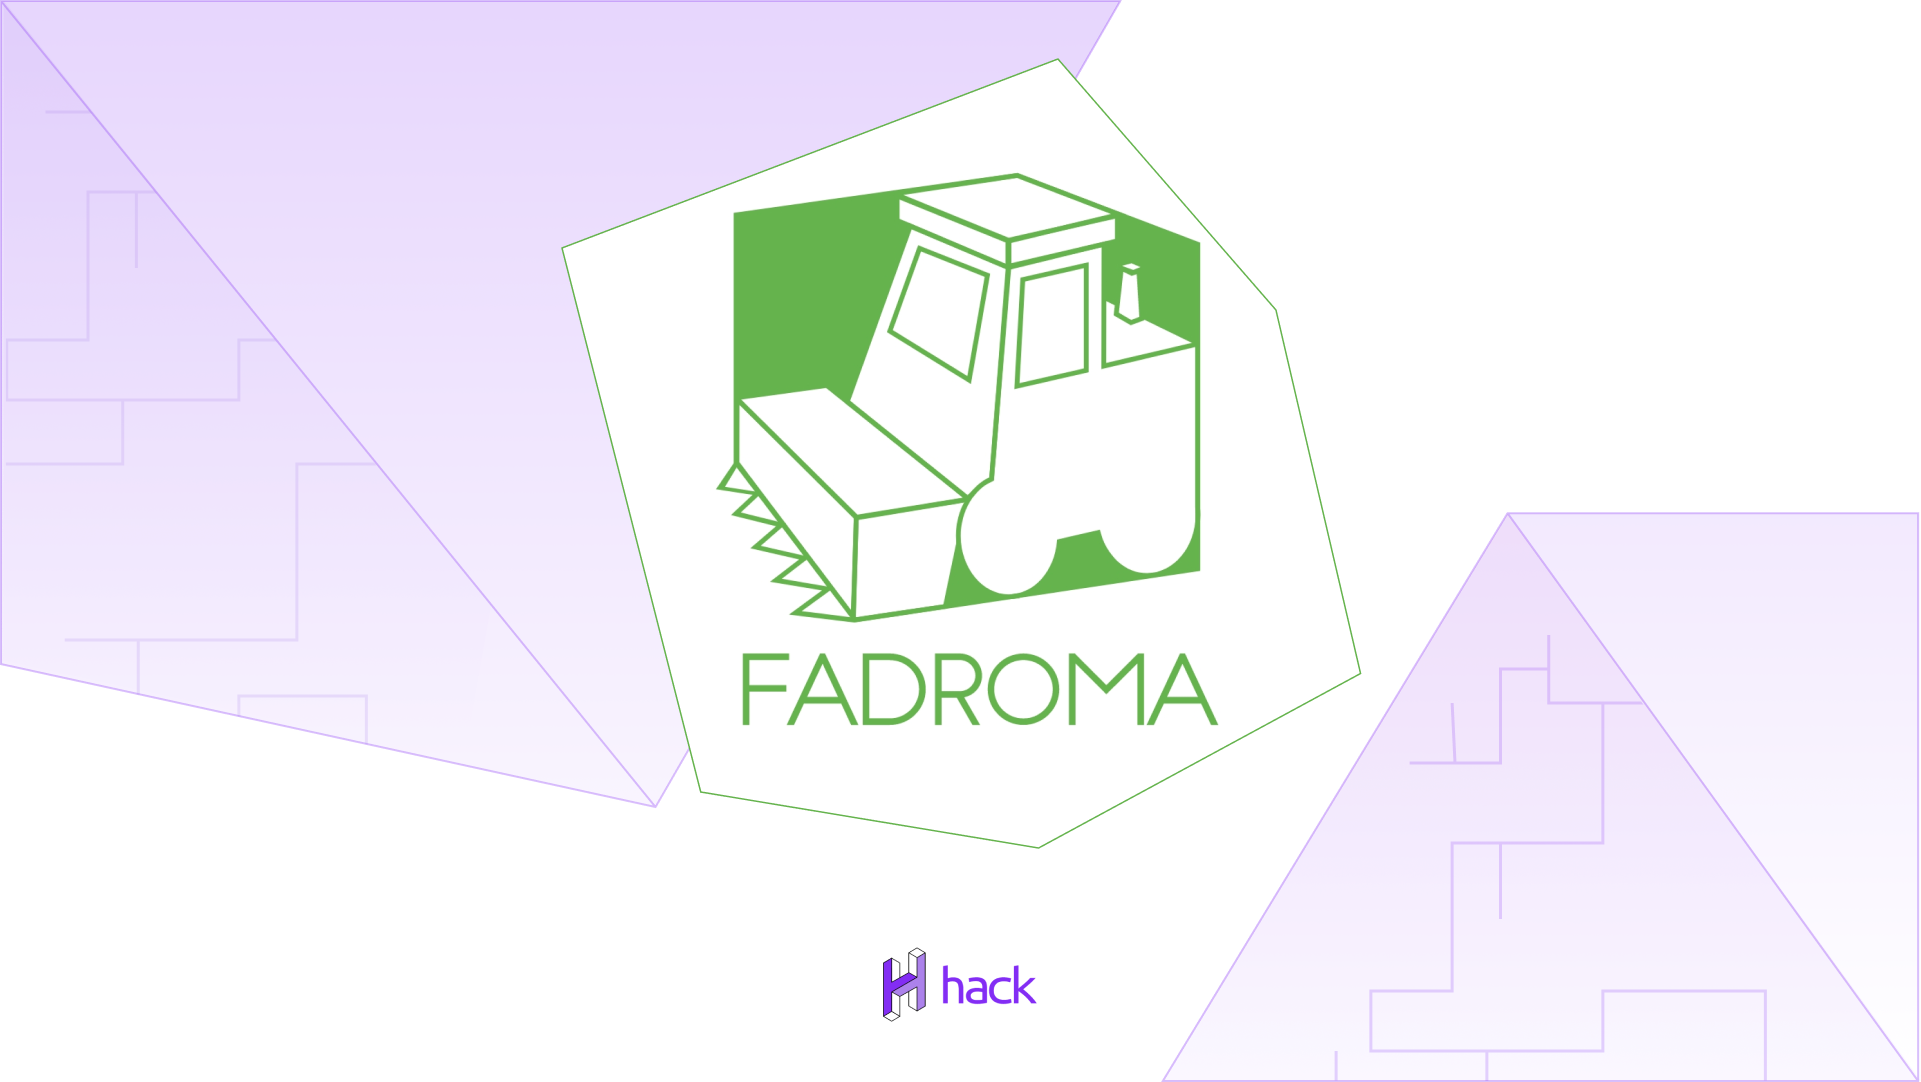 Let's talk Blockchain - Fadroma - Tech talks with Adam Avramov 1